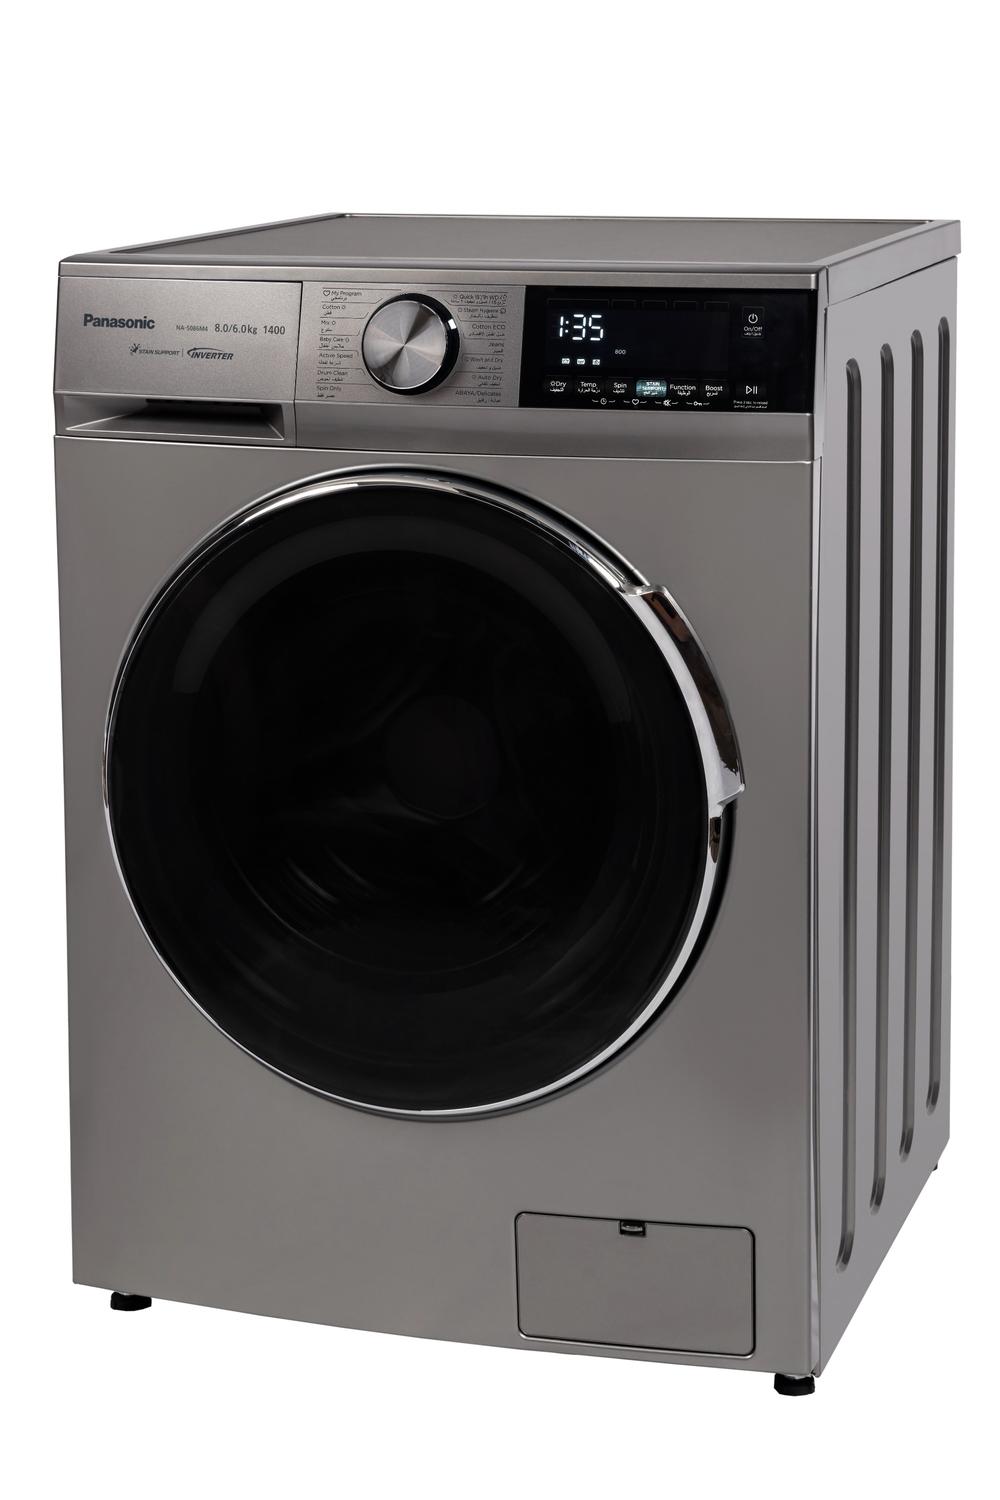 Panasonic 8/6 Kg Washer & Dryer | Silver  - Modern Electronics